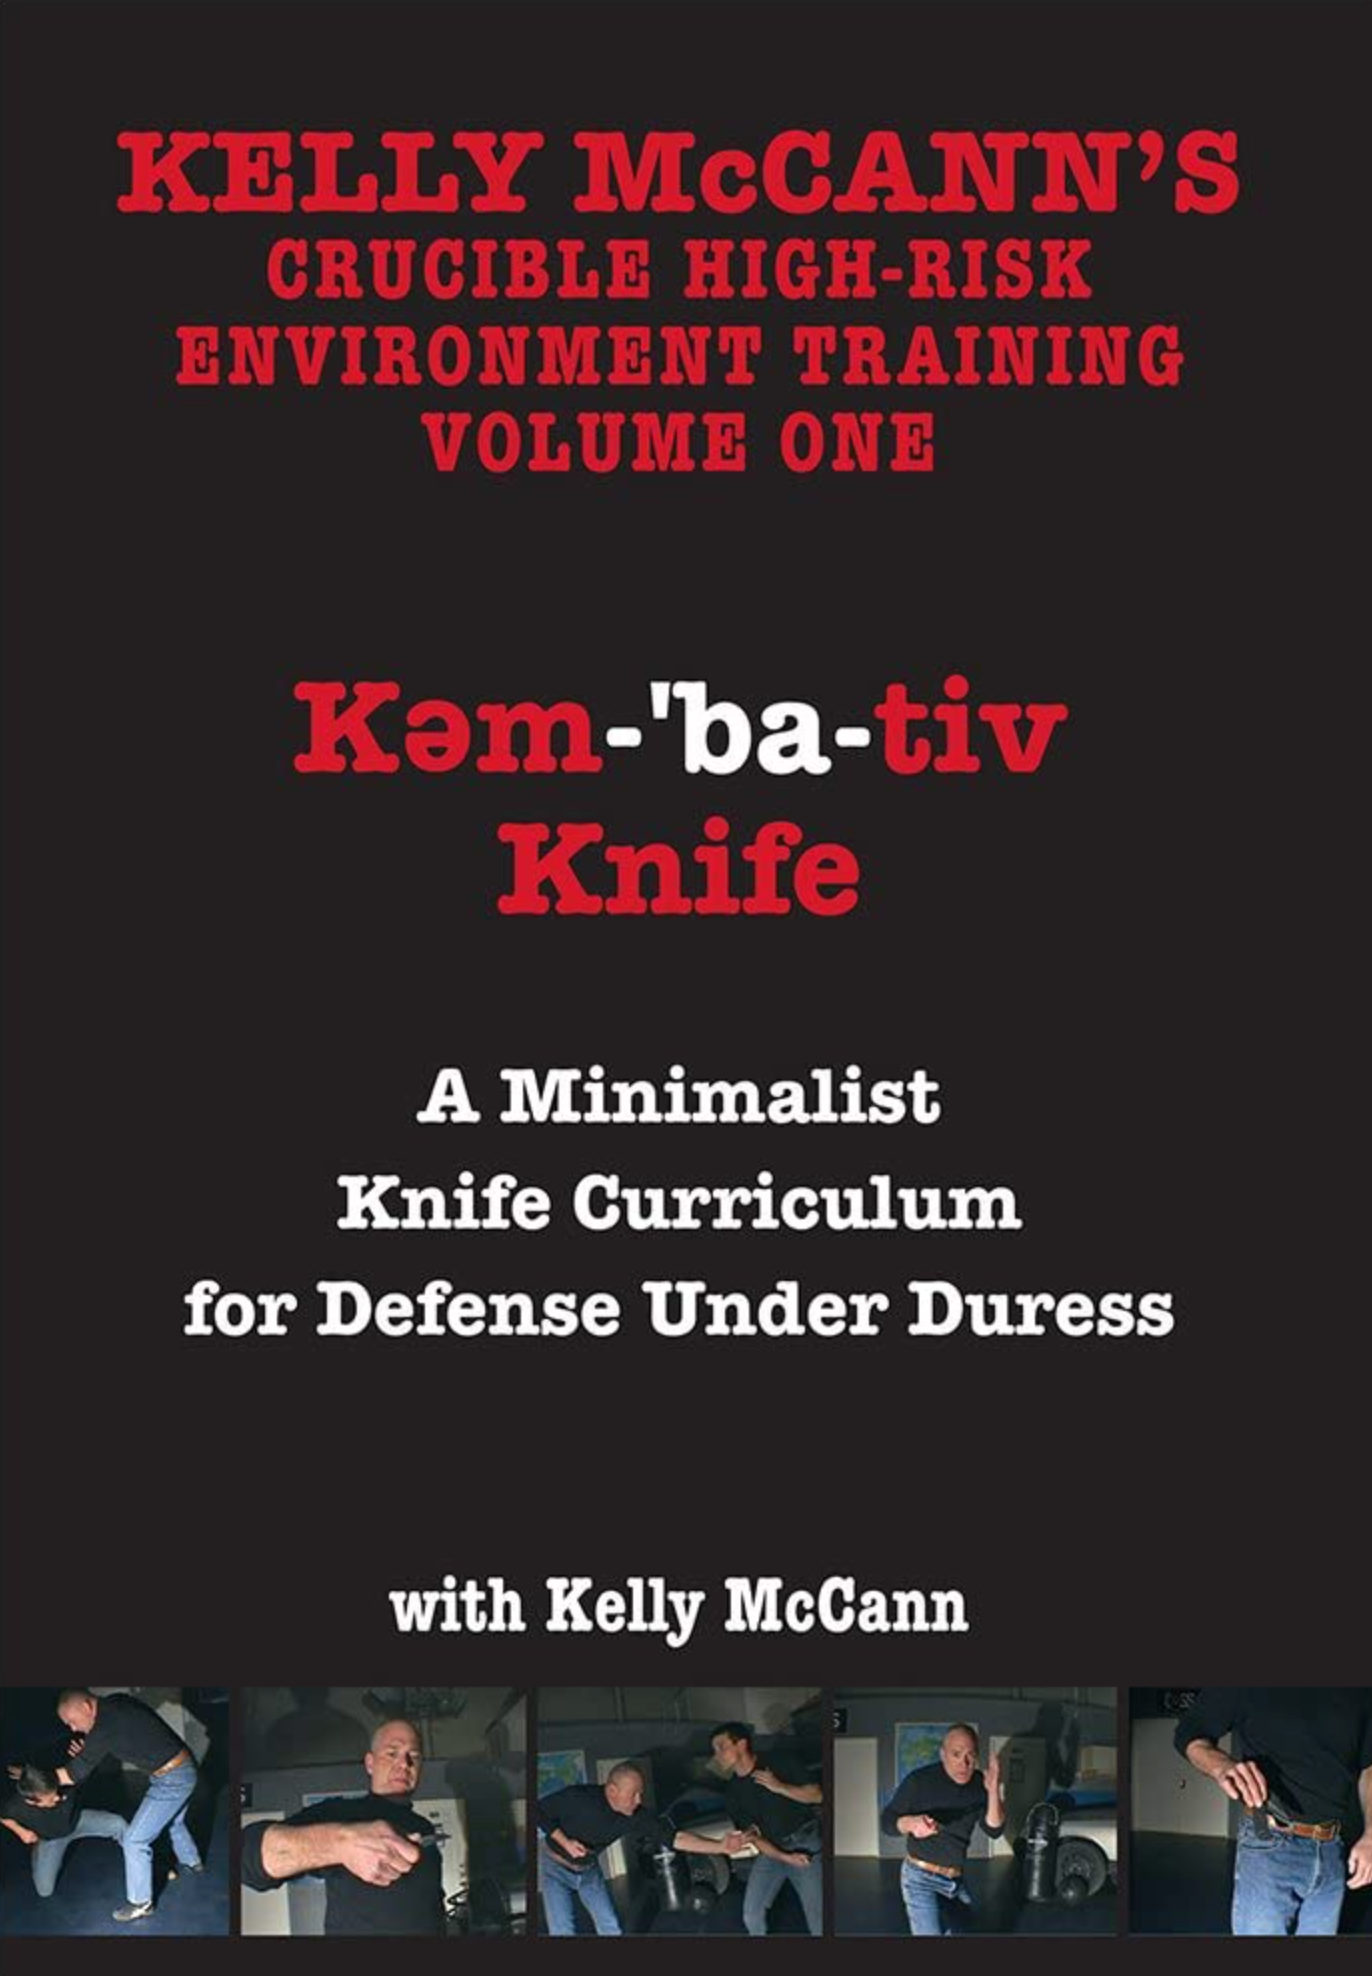 Kelly McCann's Crucible High Risk Environment Training Vol 1 Cuchillo Kem-ba-tive con Kelly McCann (usado) 